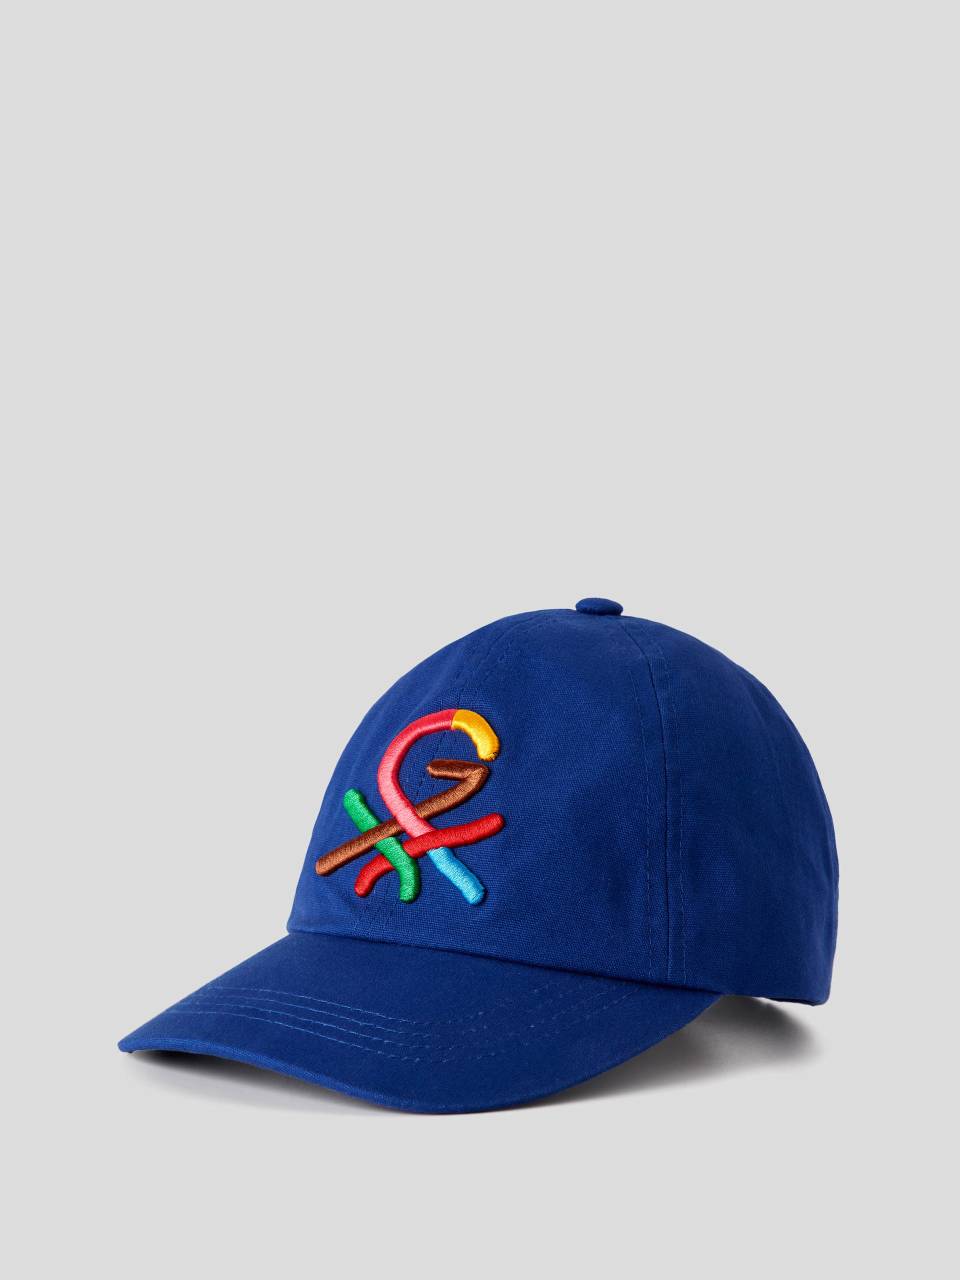 Benetton Cornflower blue hat with embroidered logo by Ghali - 6G0QCA00K_79R